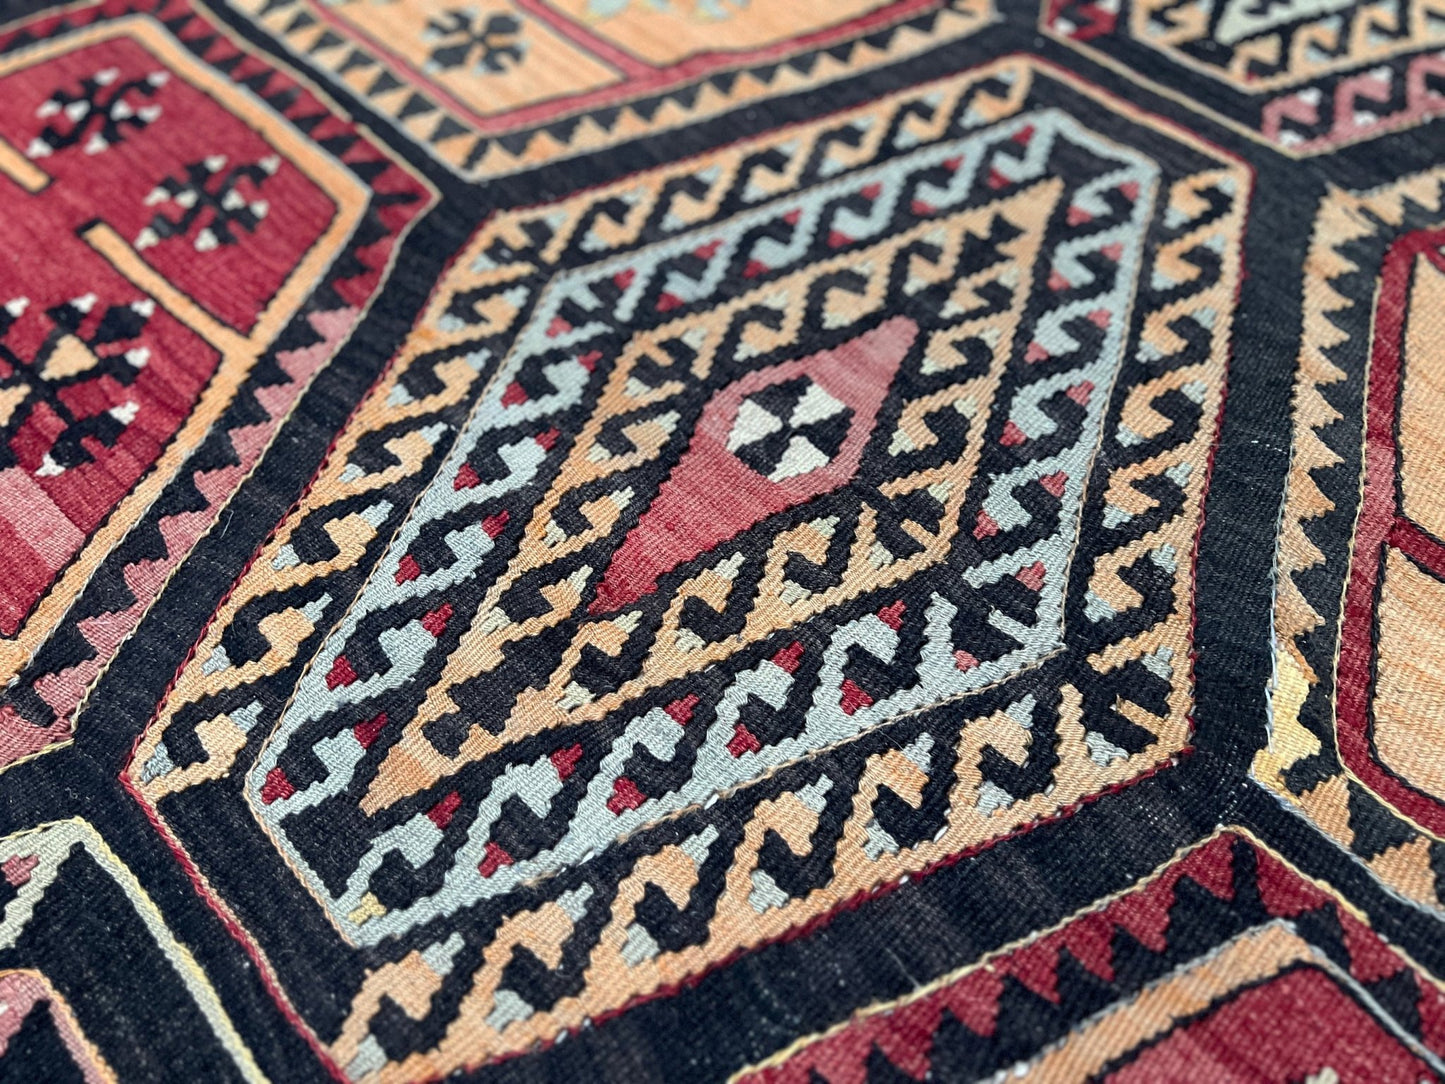 Sarkisla turkish kilim rug shop san francisco bay area. Handmade wool rug for bohemian tribal design. Buy handmade wool rug online.